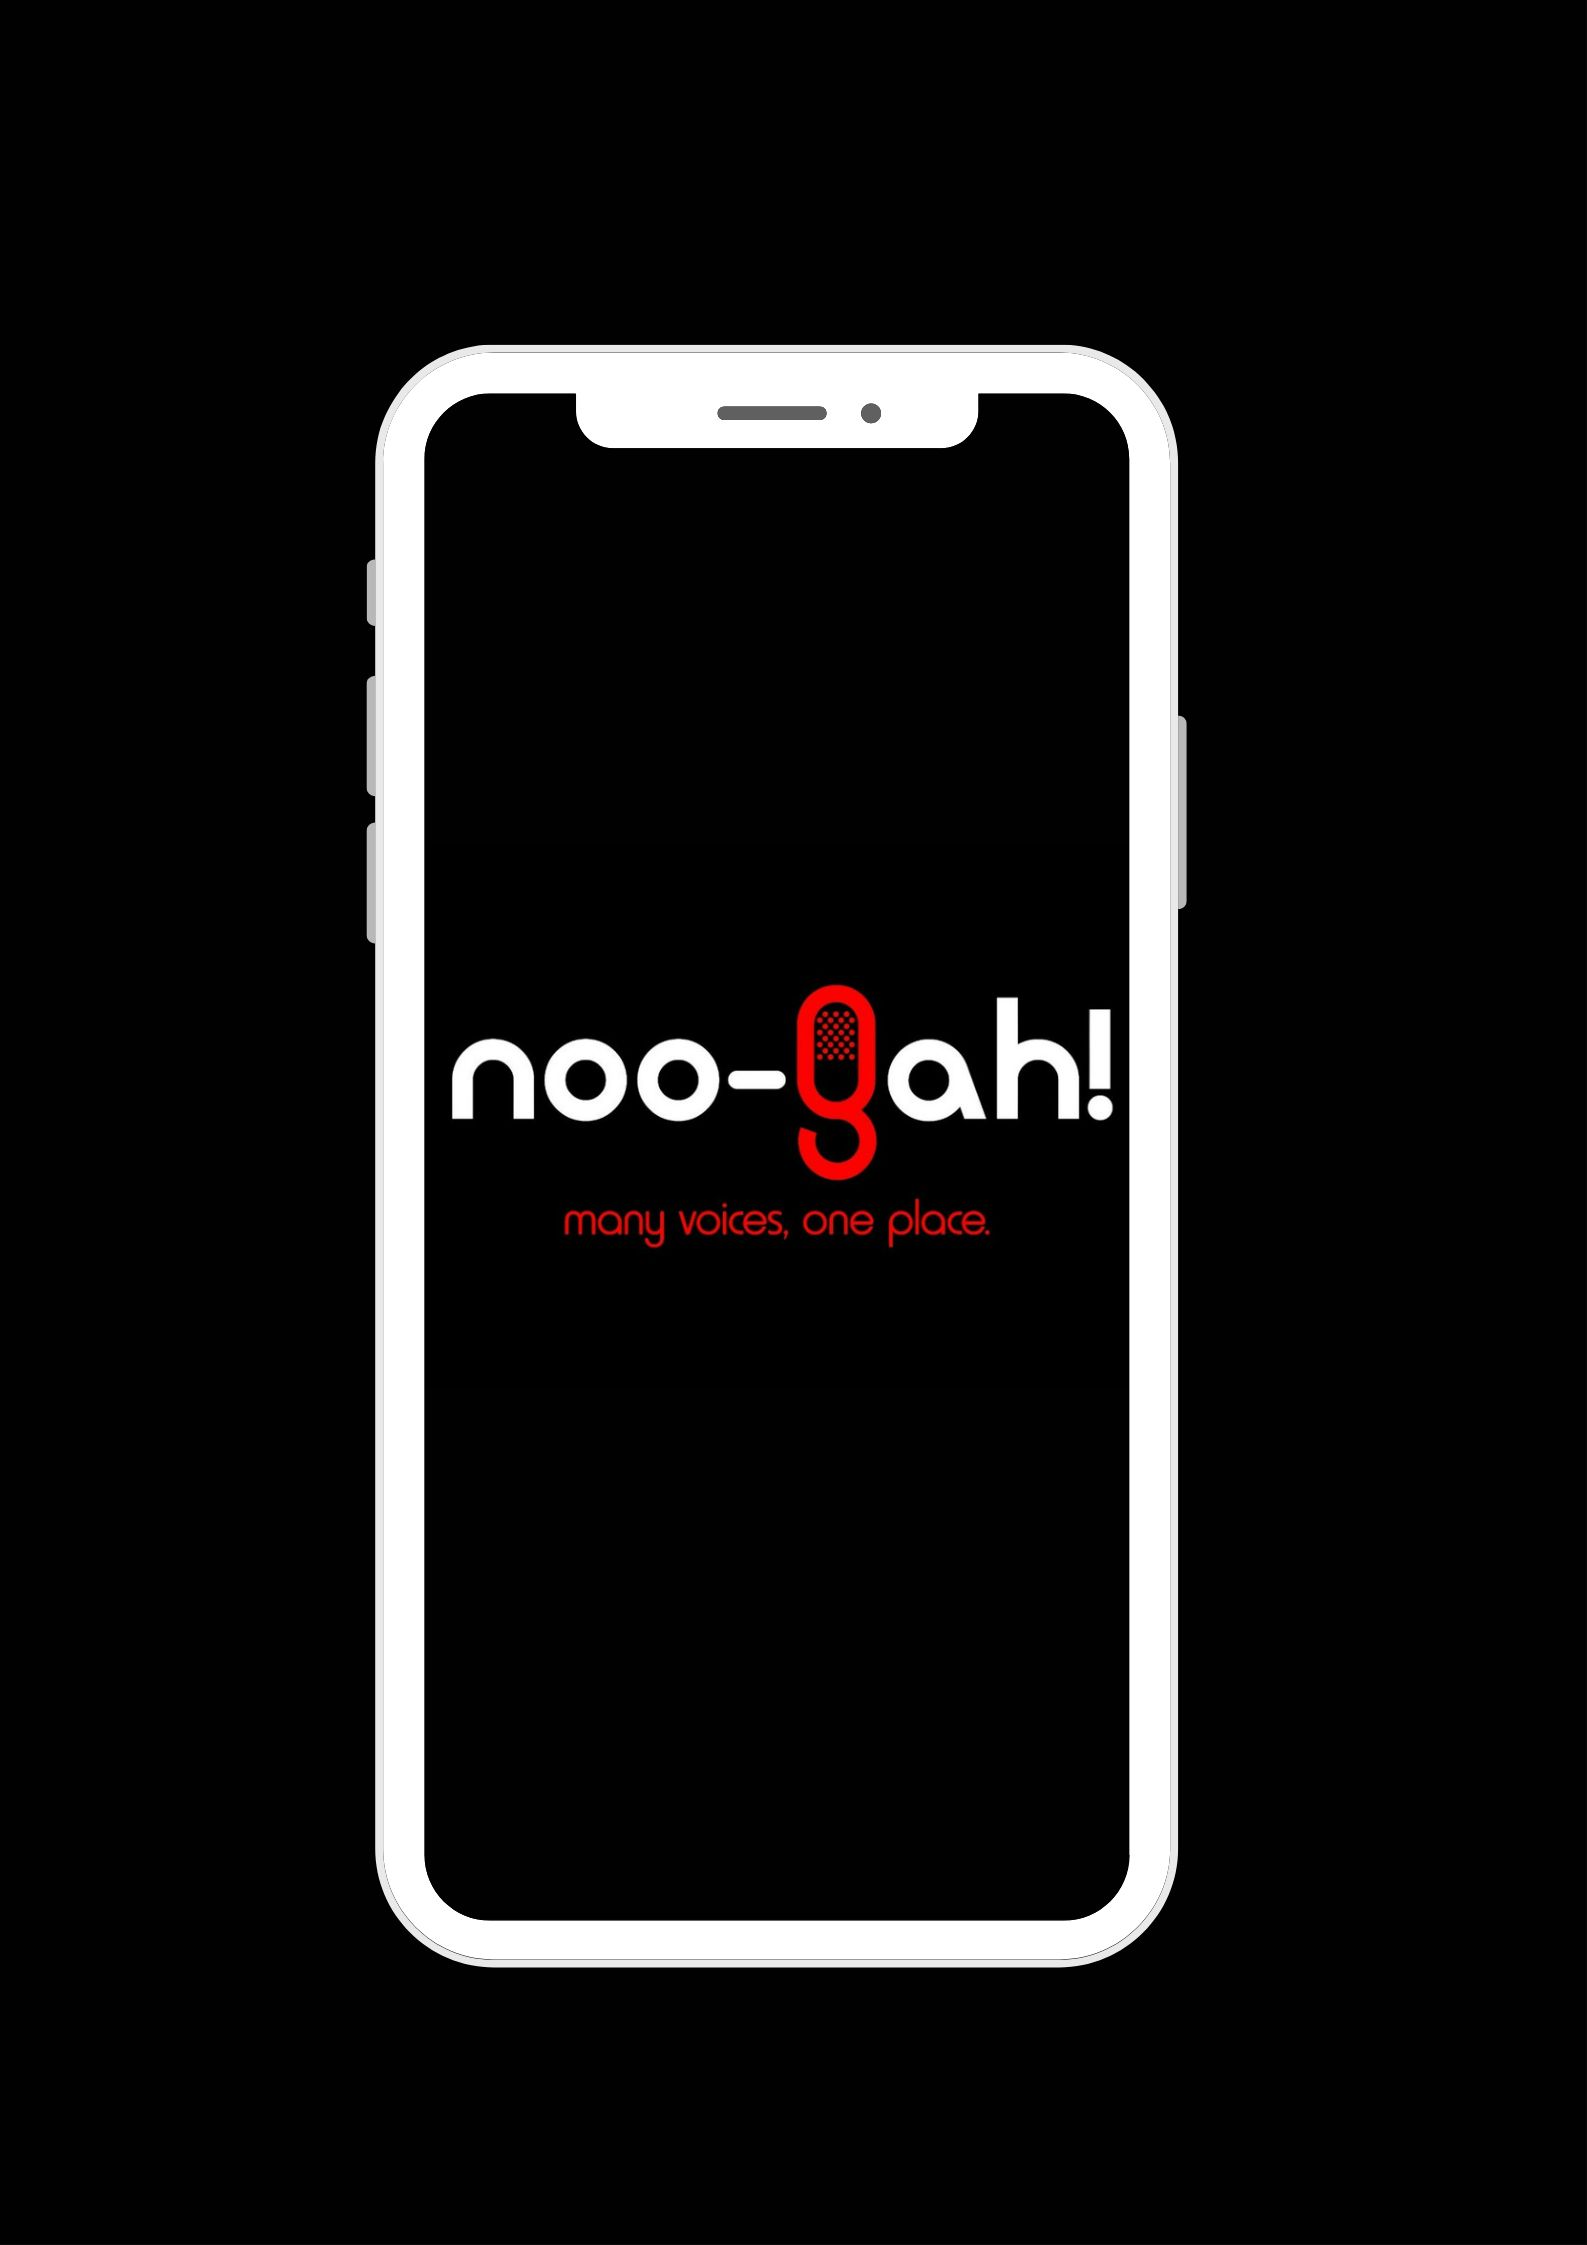 Noogah's Journey: Hosting a Dynamic Social Media App on AWS